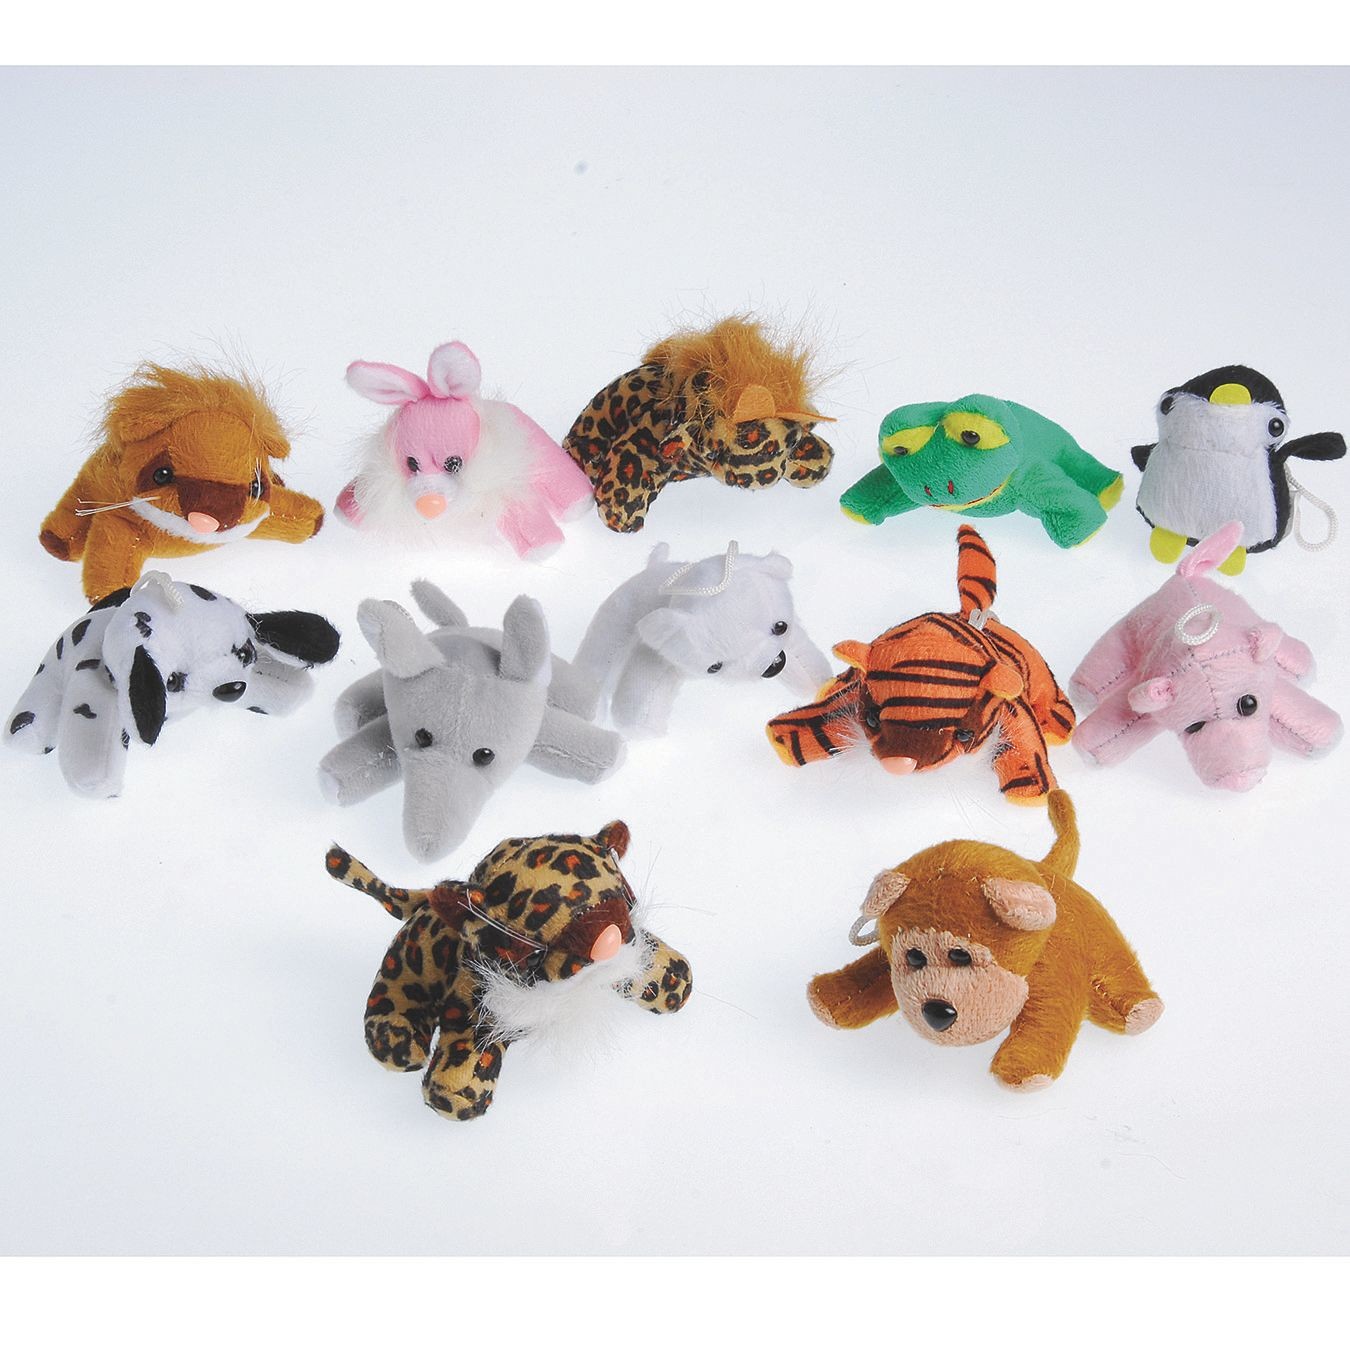 Buy Small Plush Sitting Stuffed Animal Assortment (Pack of 12) at